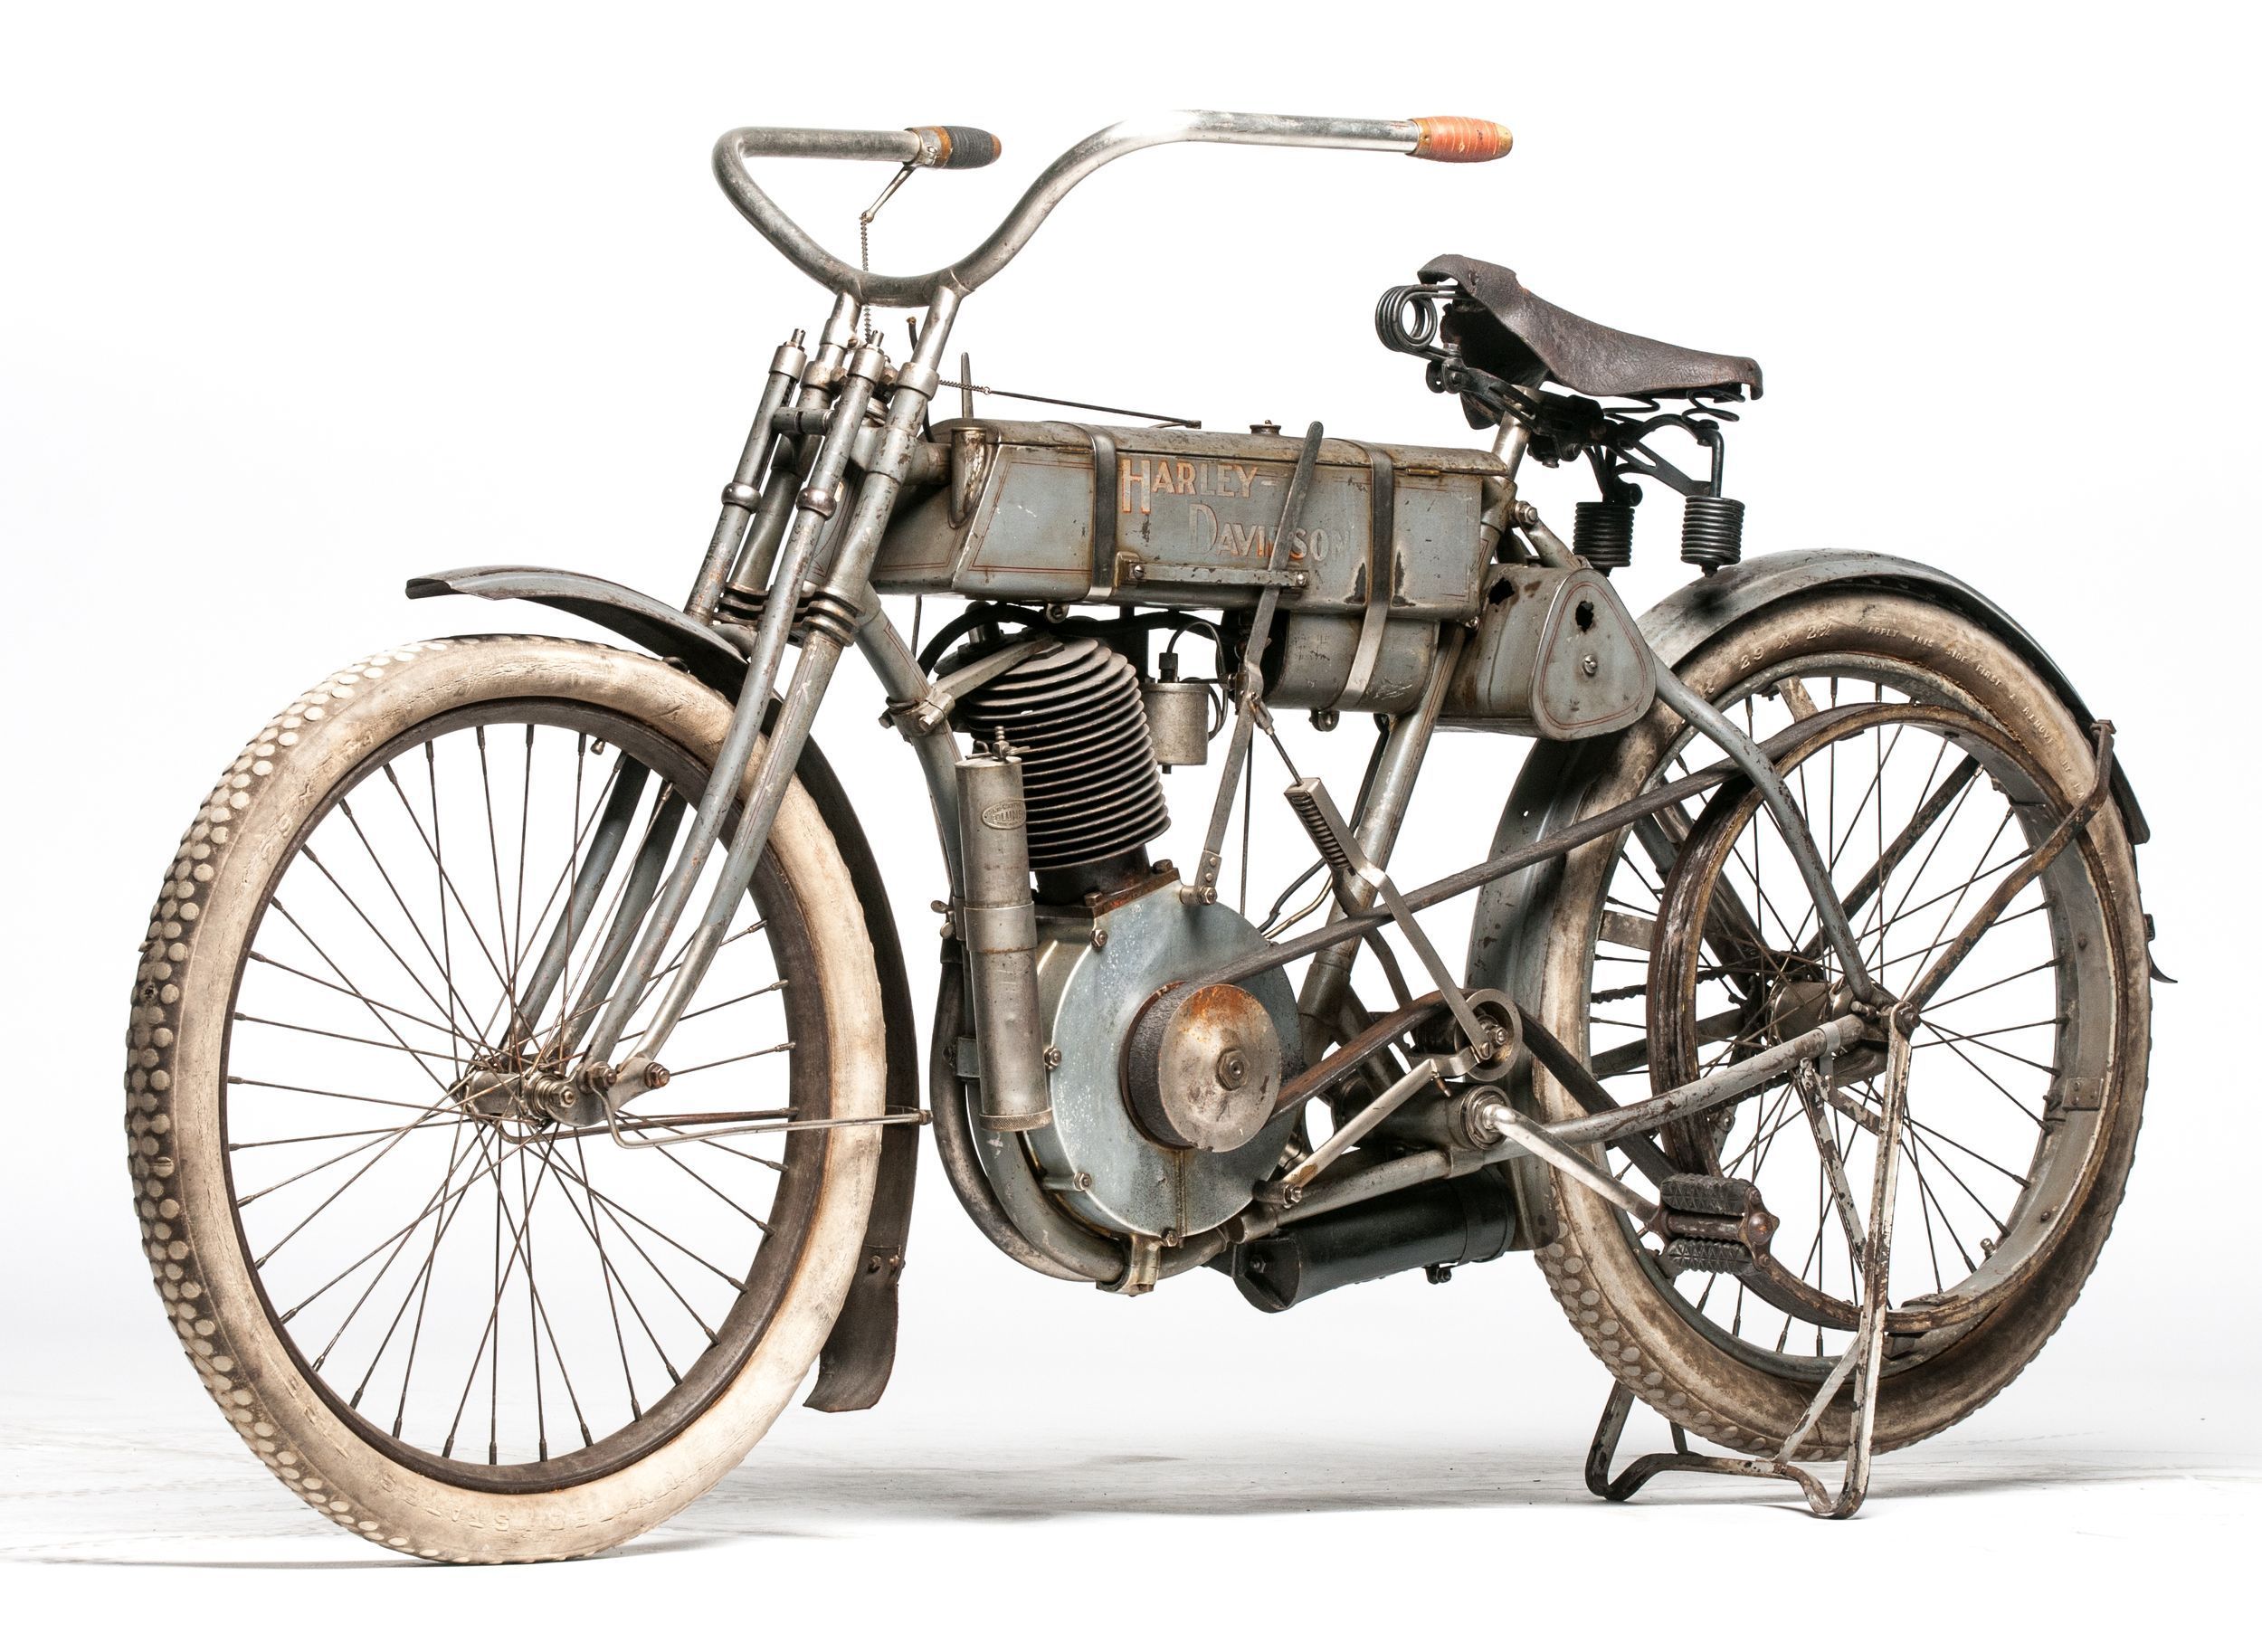 the 1907 Harley-Davidson Strap Tank